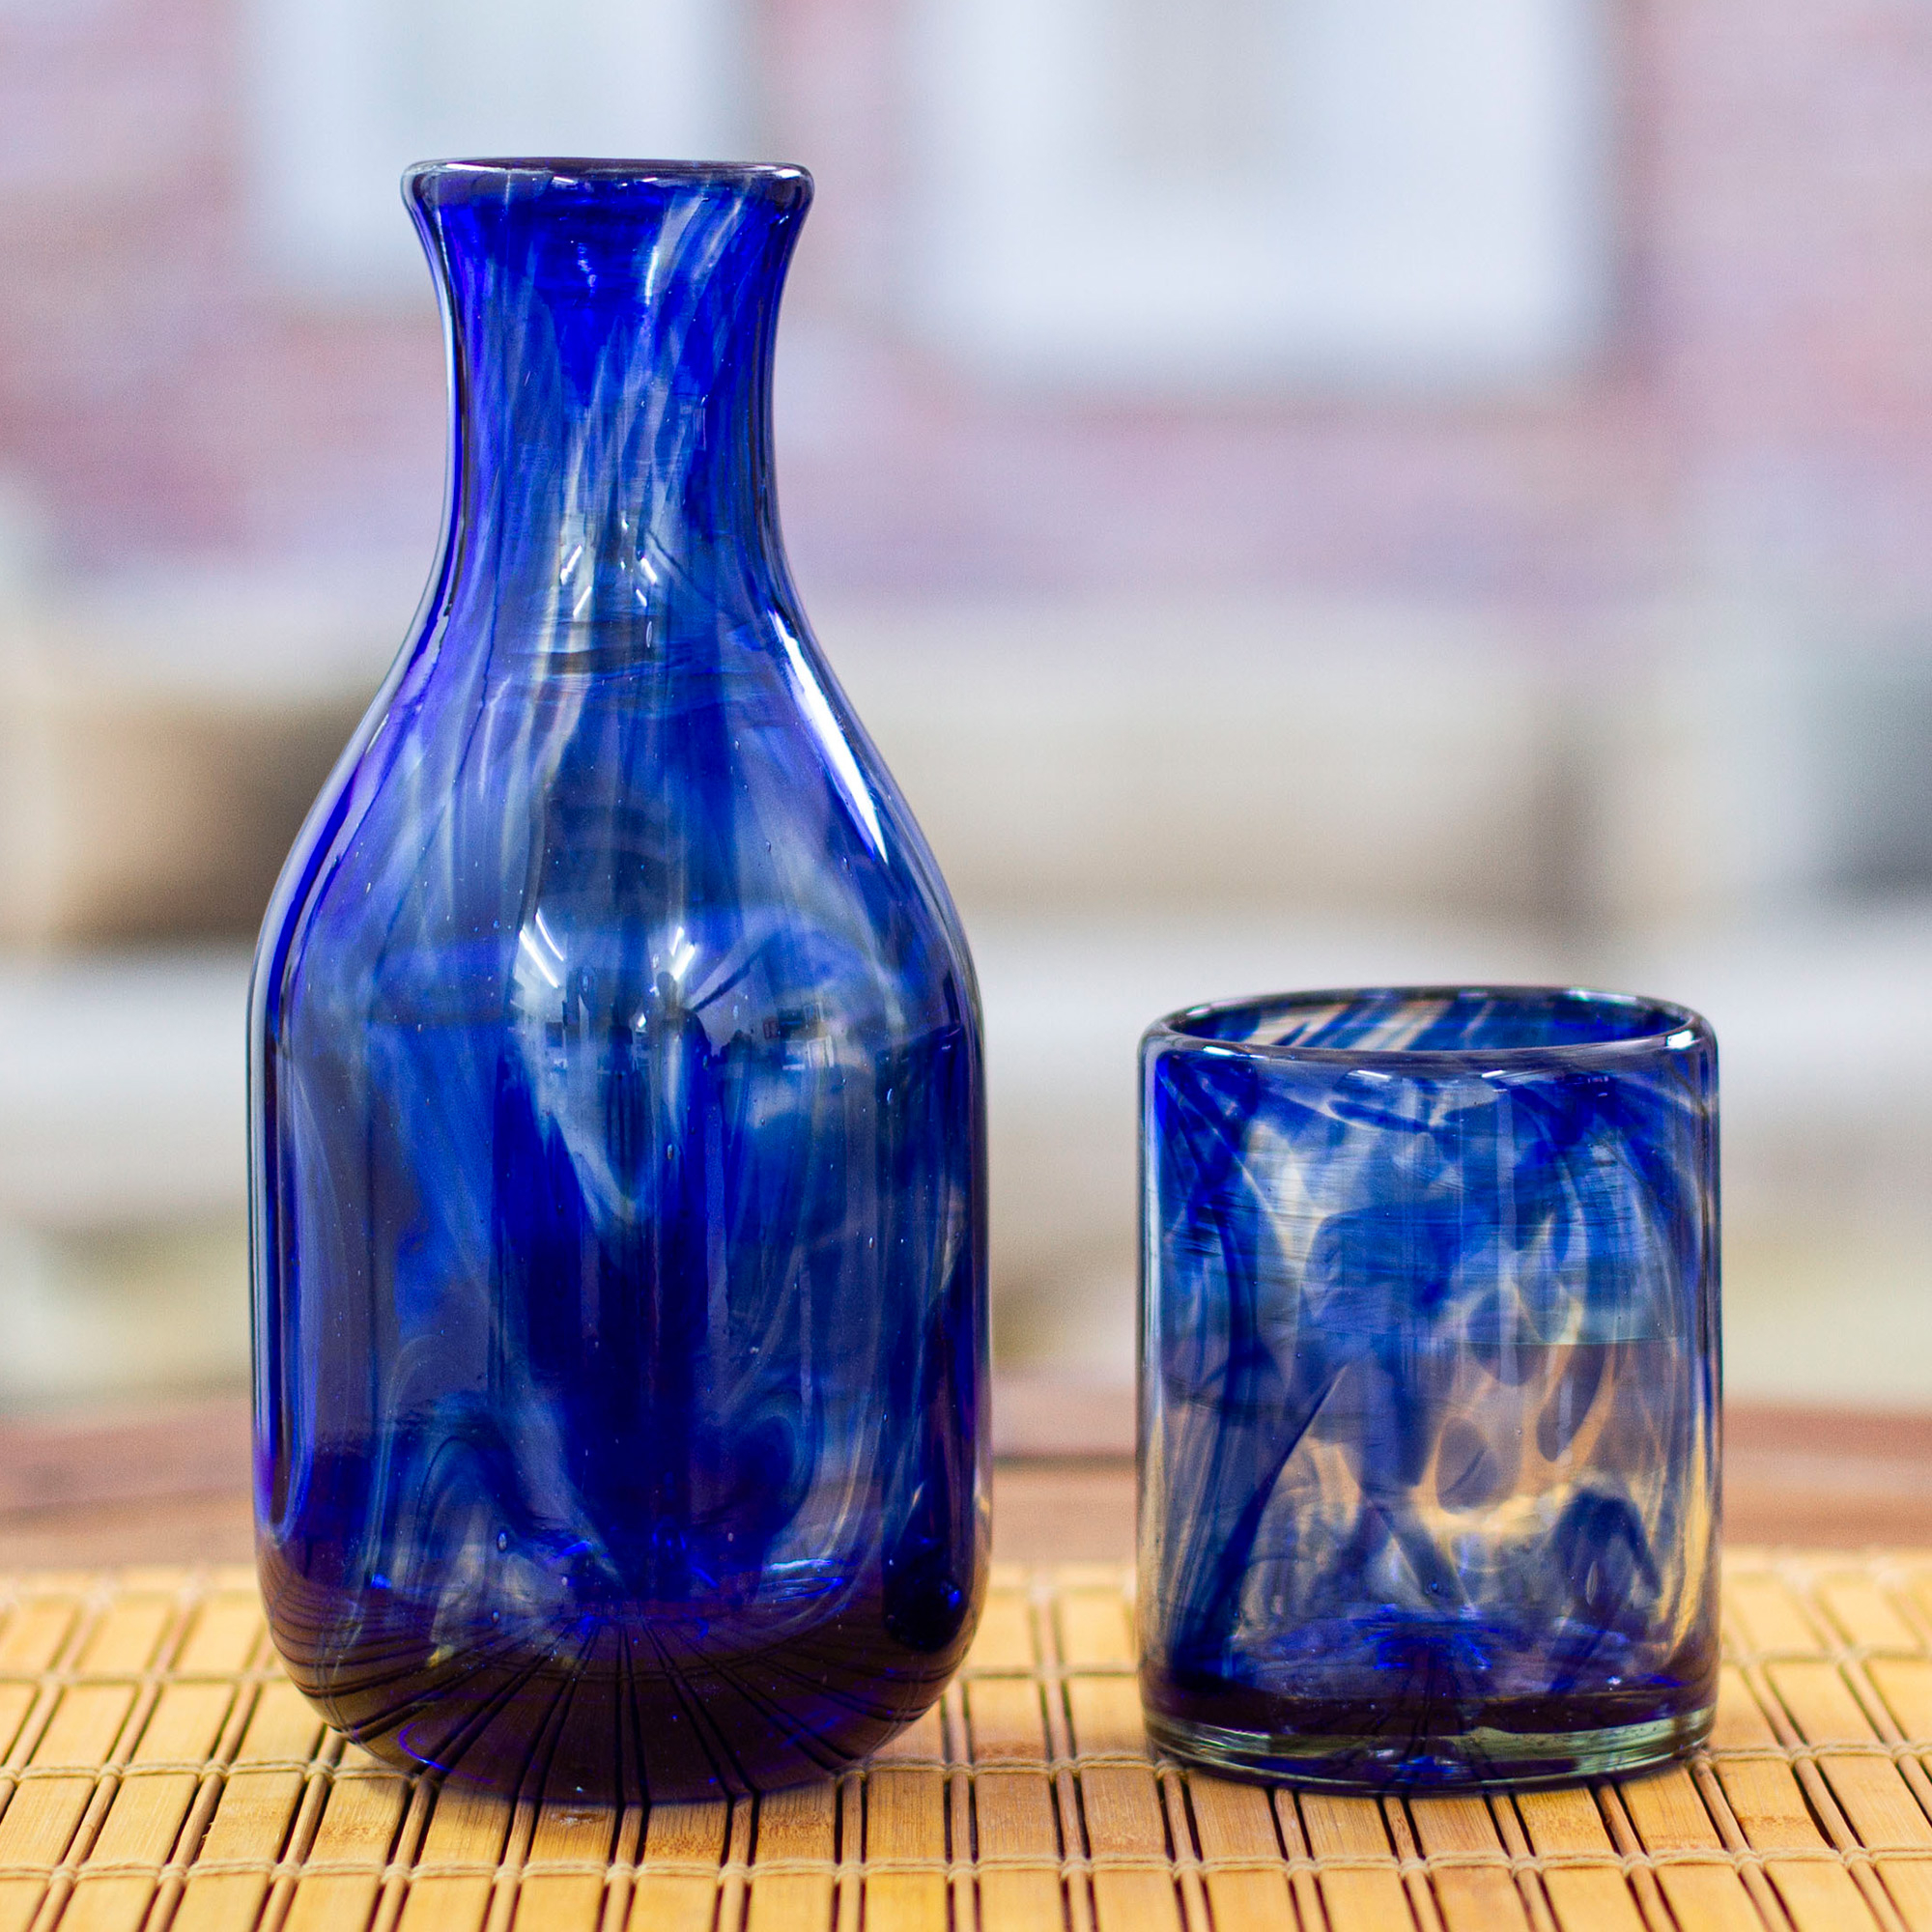 Handblown Glass Cobalt Mug Large Size.